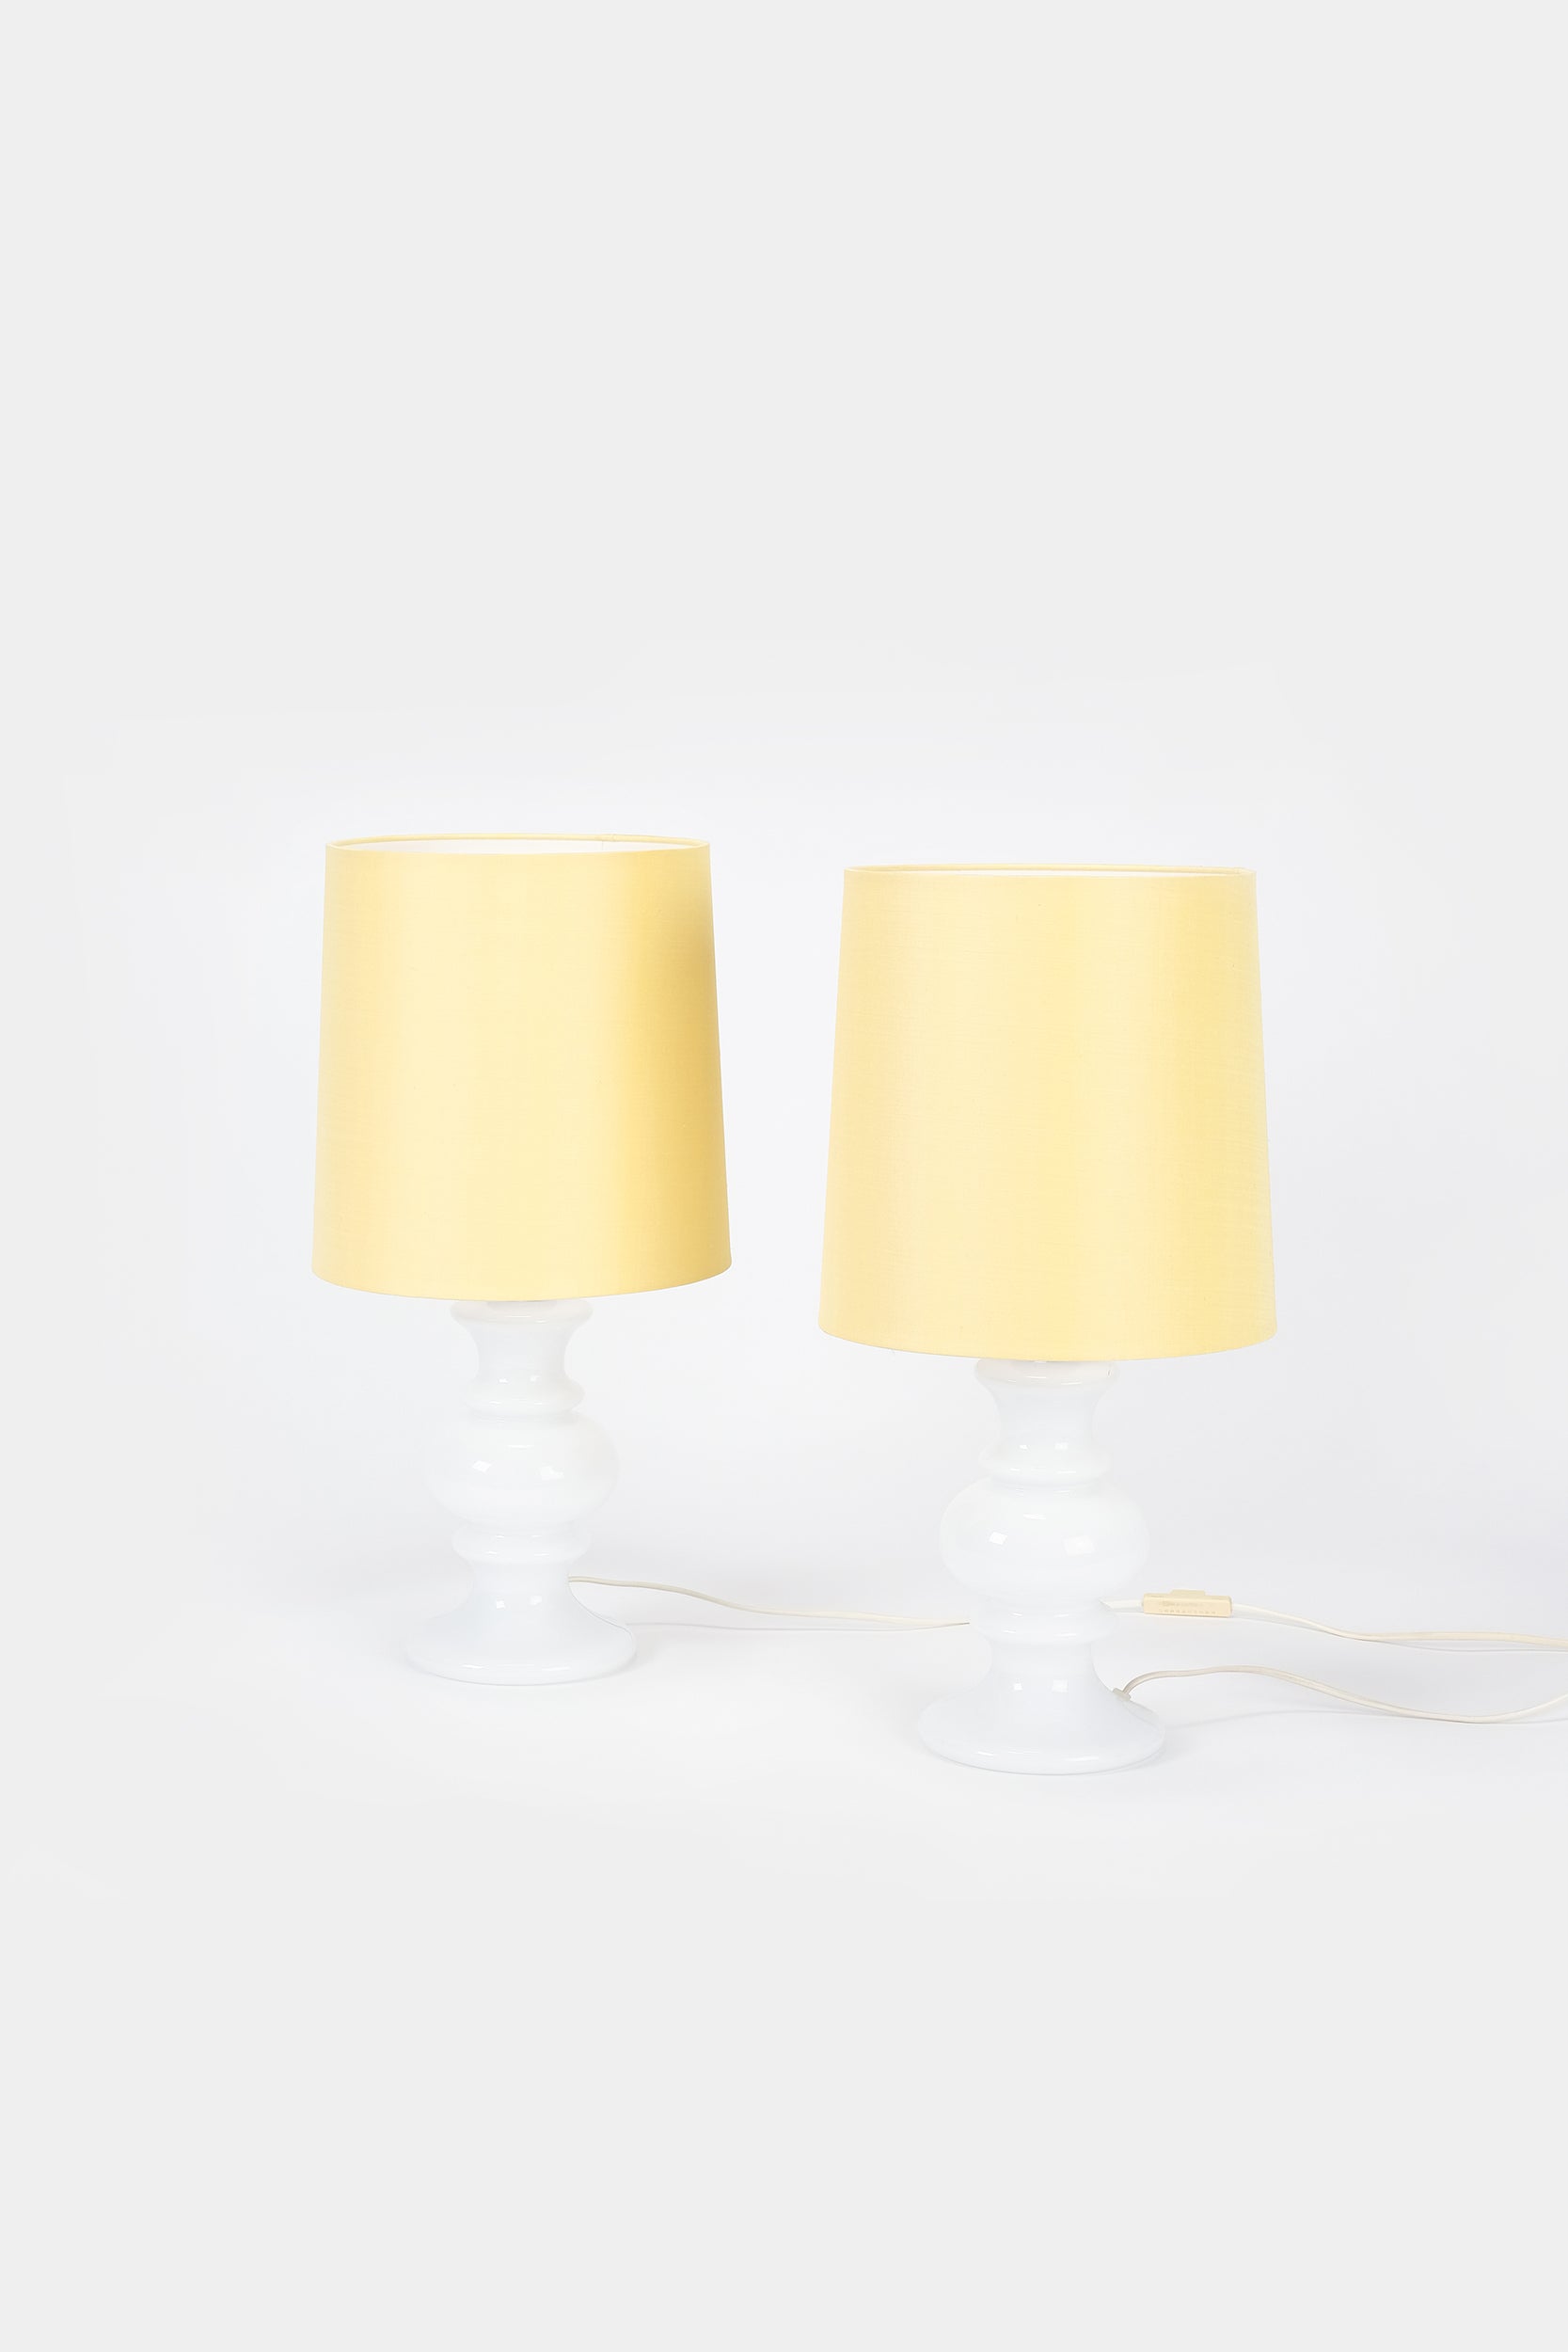 Per Lütken, Pair of Table Lamps "Caroline", Holmegaard, 70s